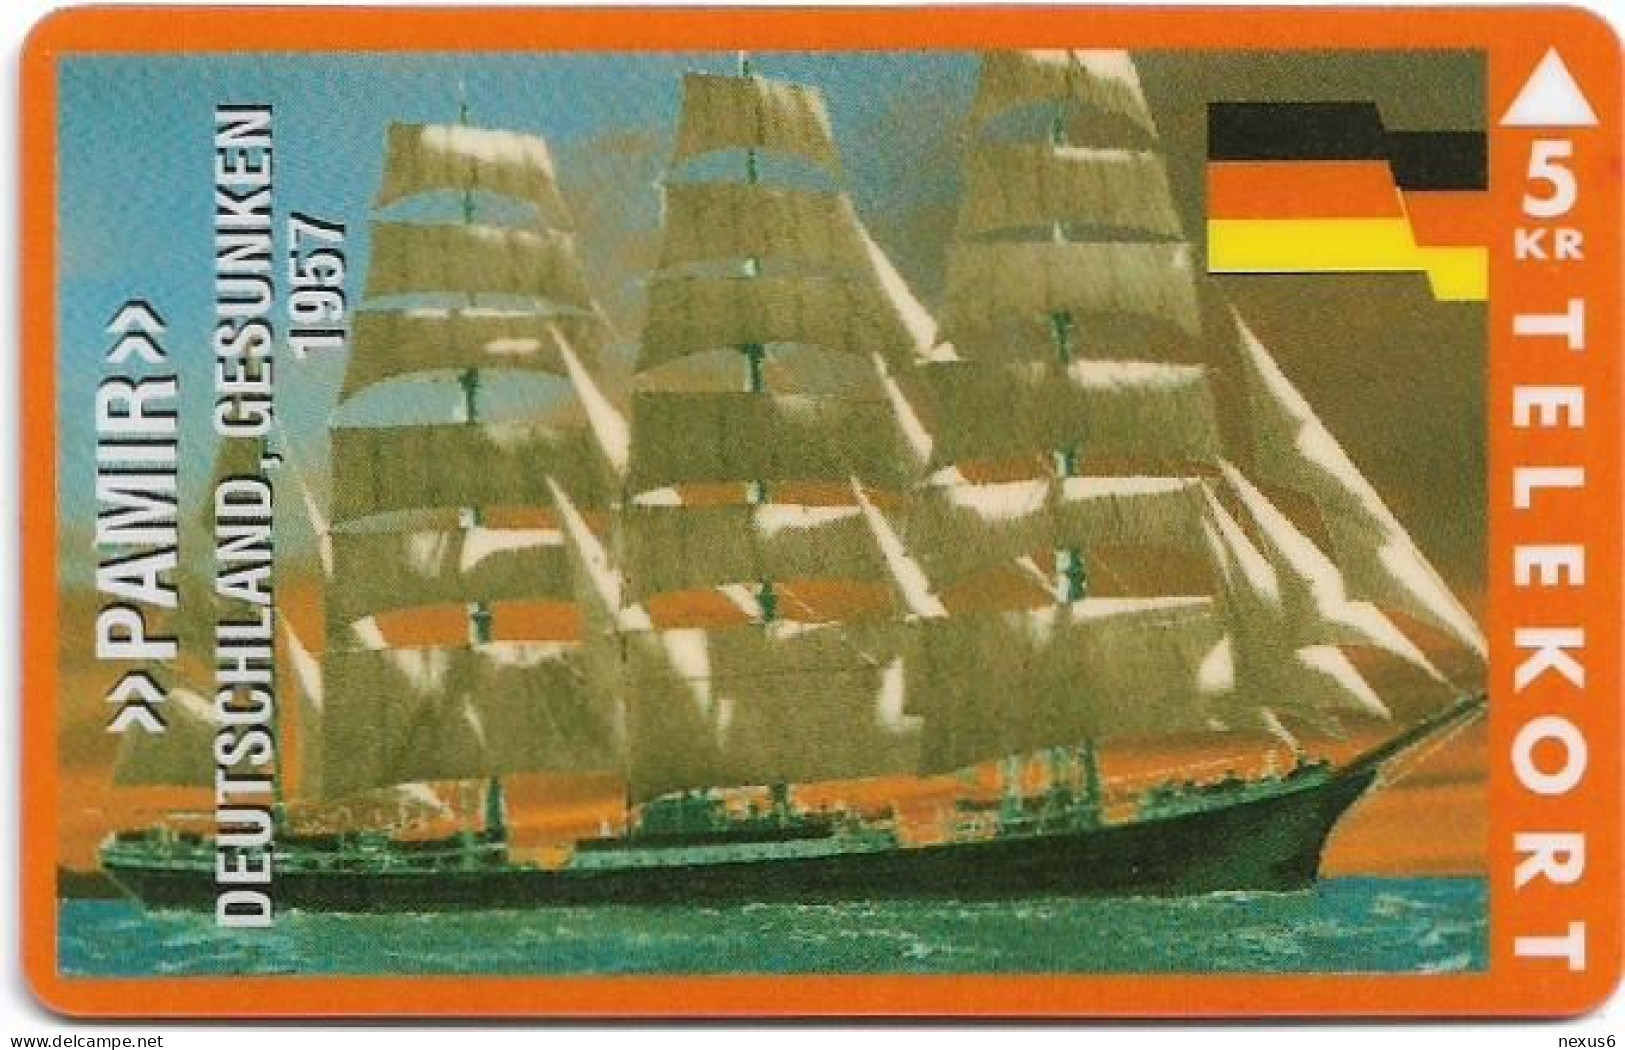 Denmark - KTAS - Ships (Red) - Germany - Pamir - TDKP136 - 03.1995, 5kr, 1.500ex, Used - Denmark